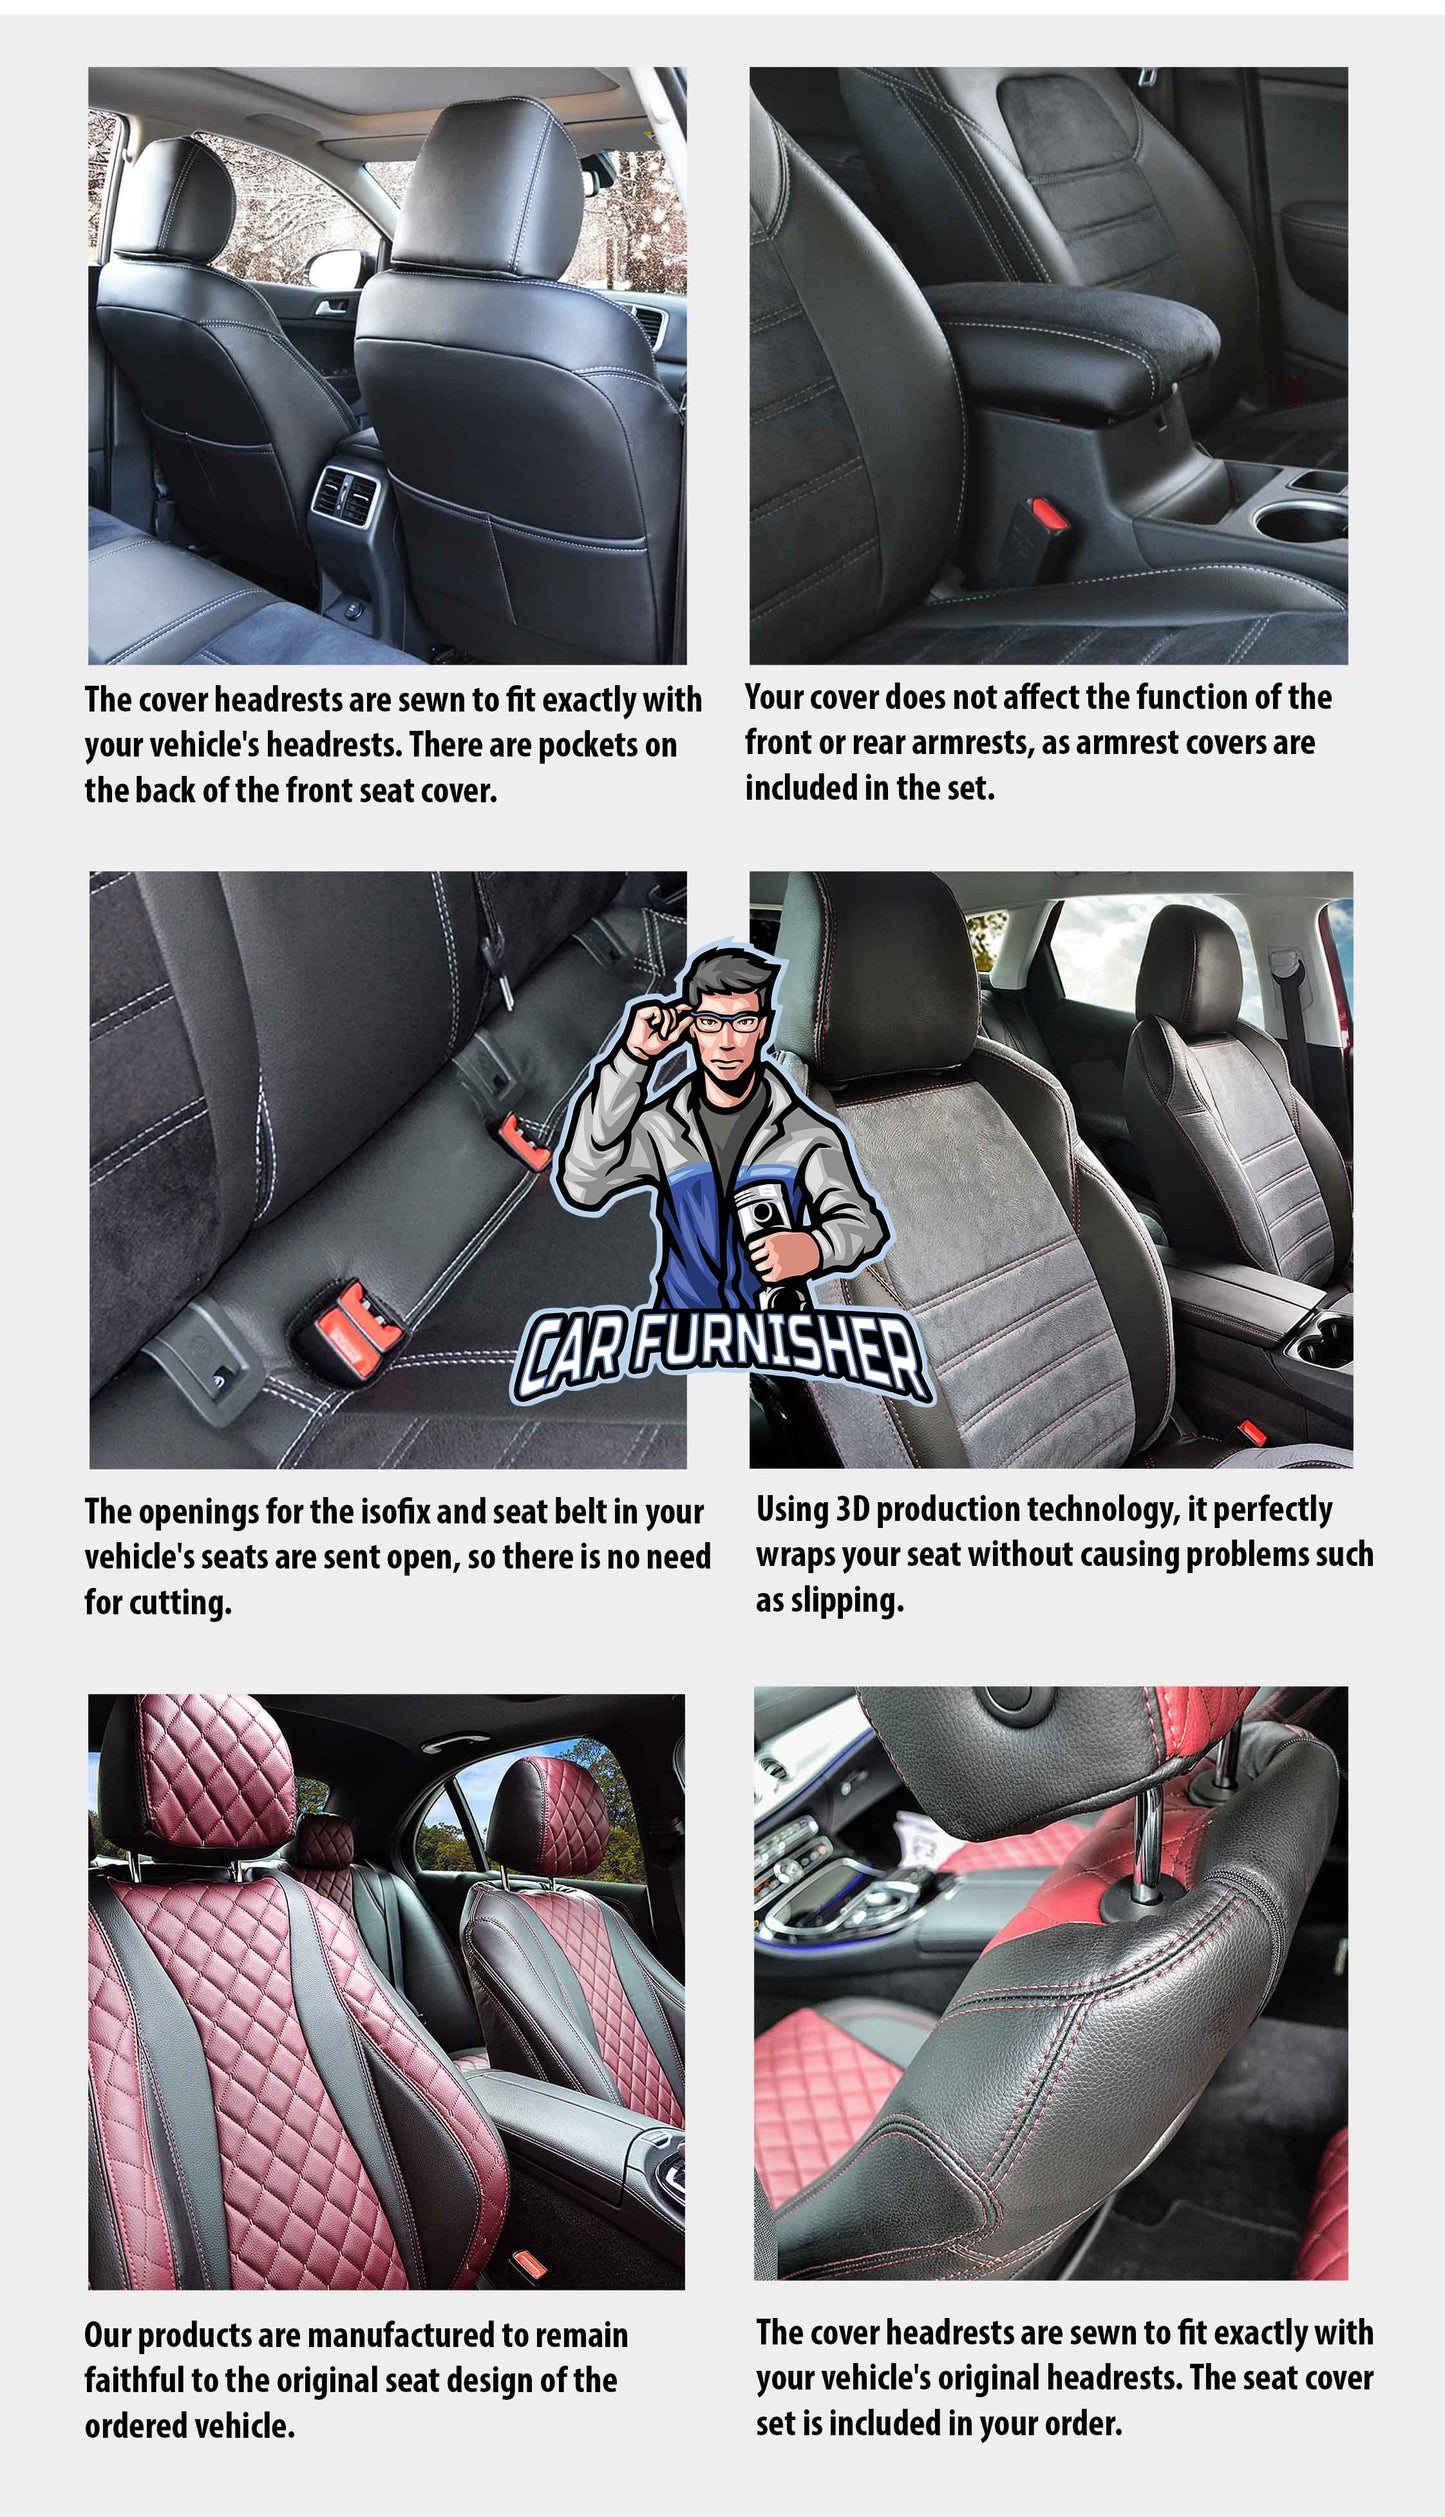 Suzuki Grand Vitara Seat Covers Paris Leather & Jacquard Design Beige Leather & Jacquard Fabric